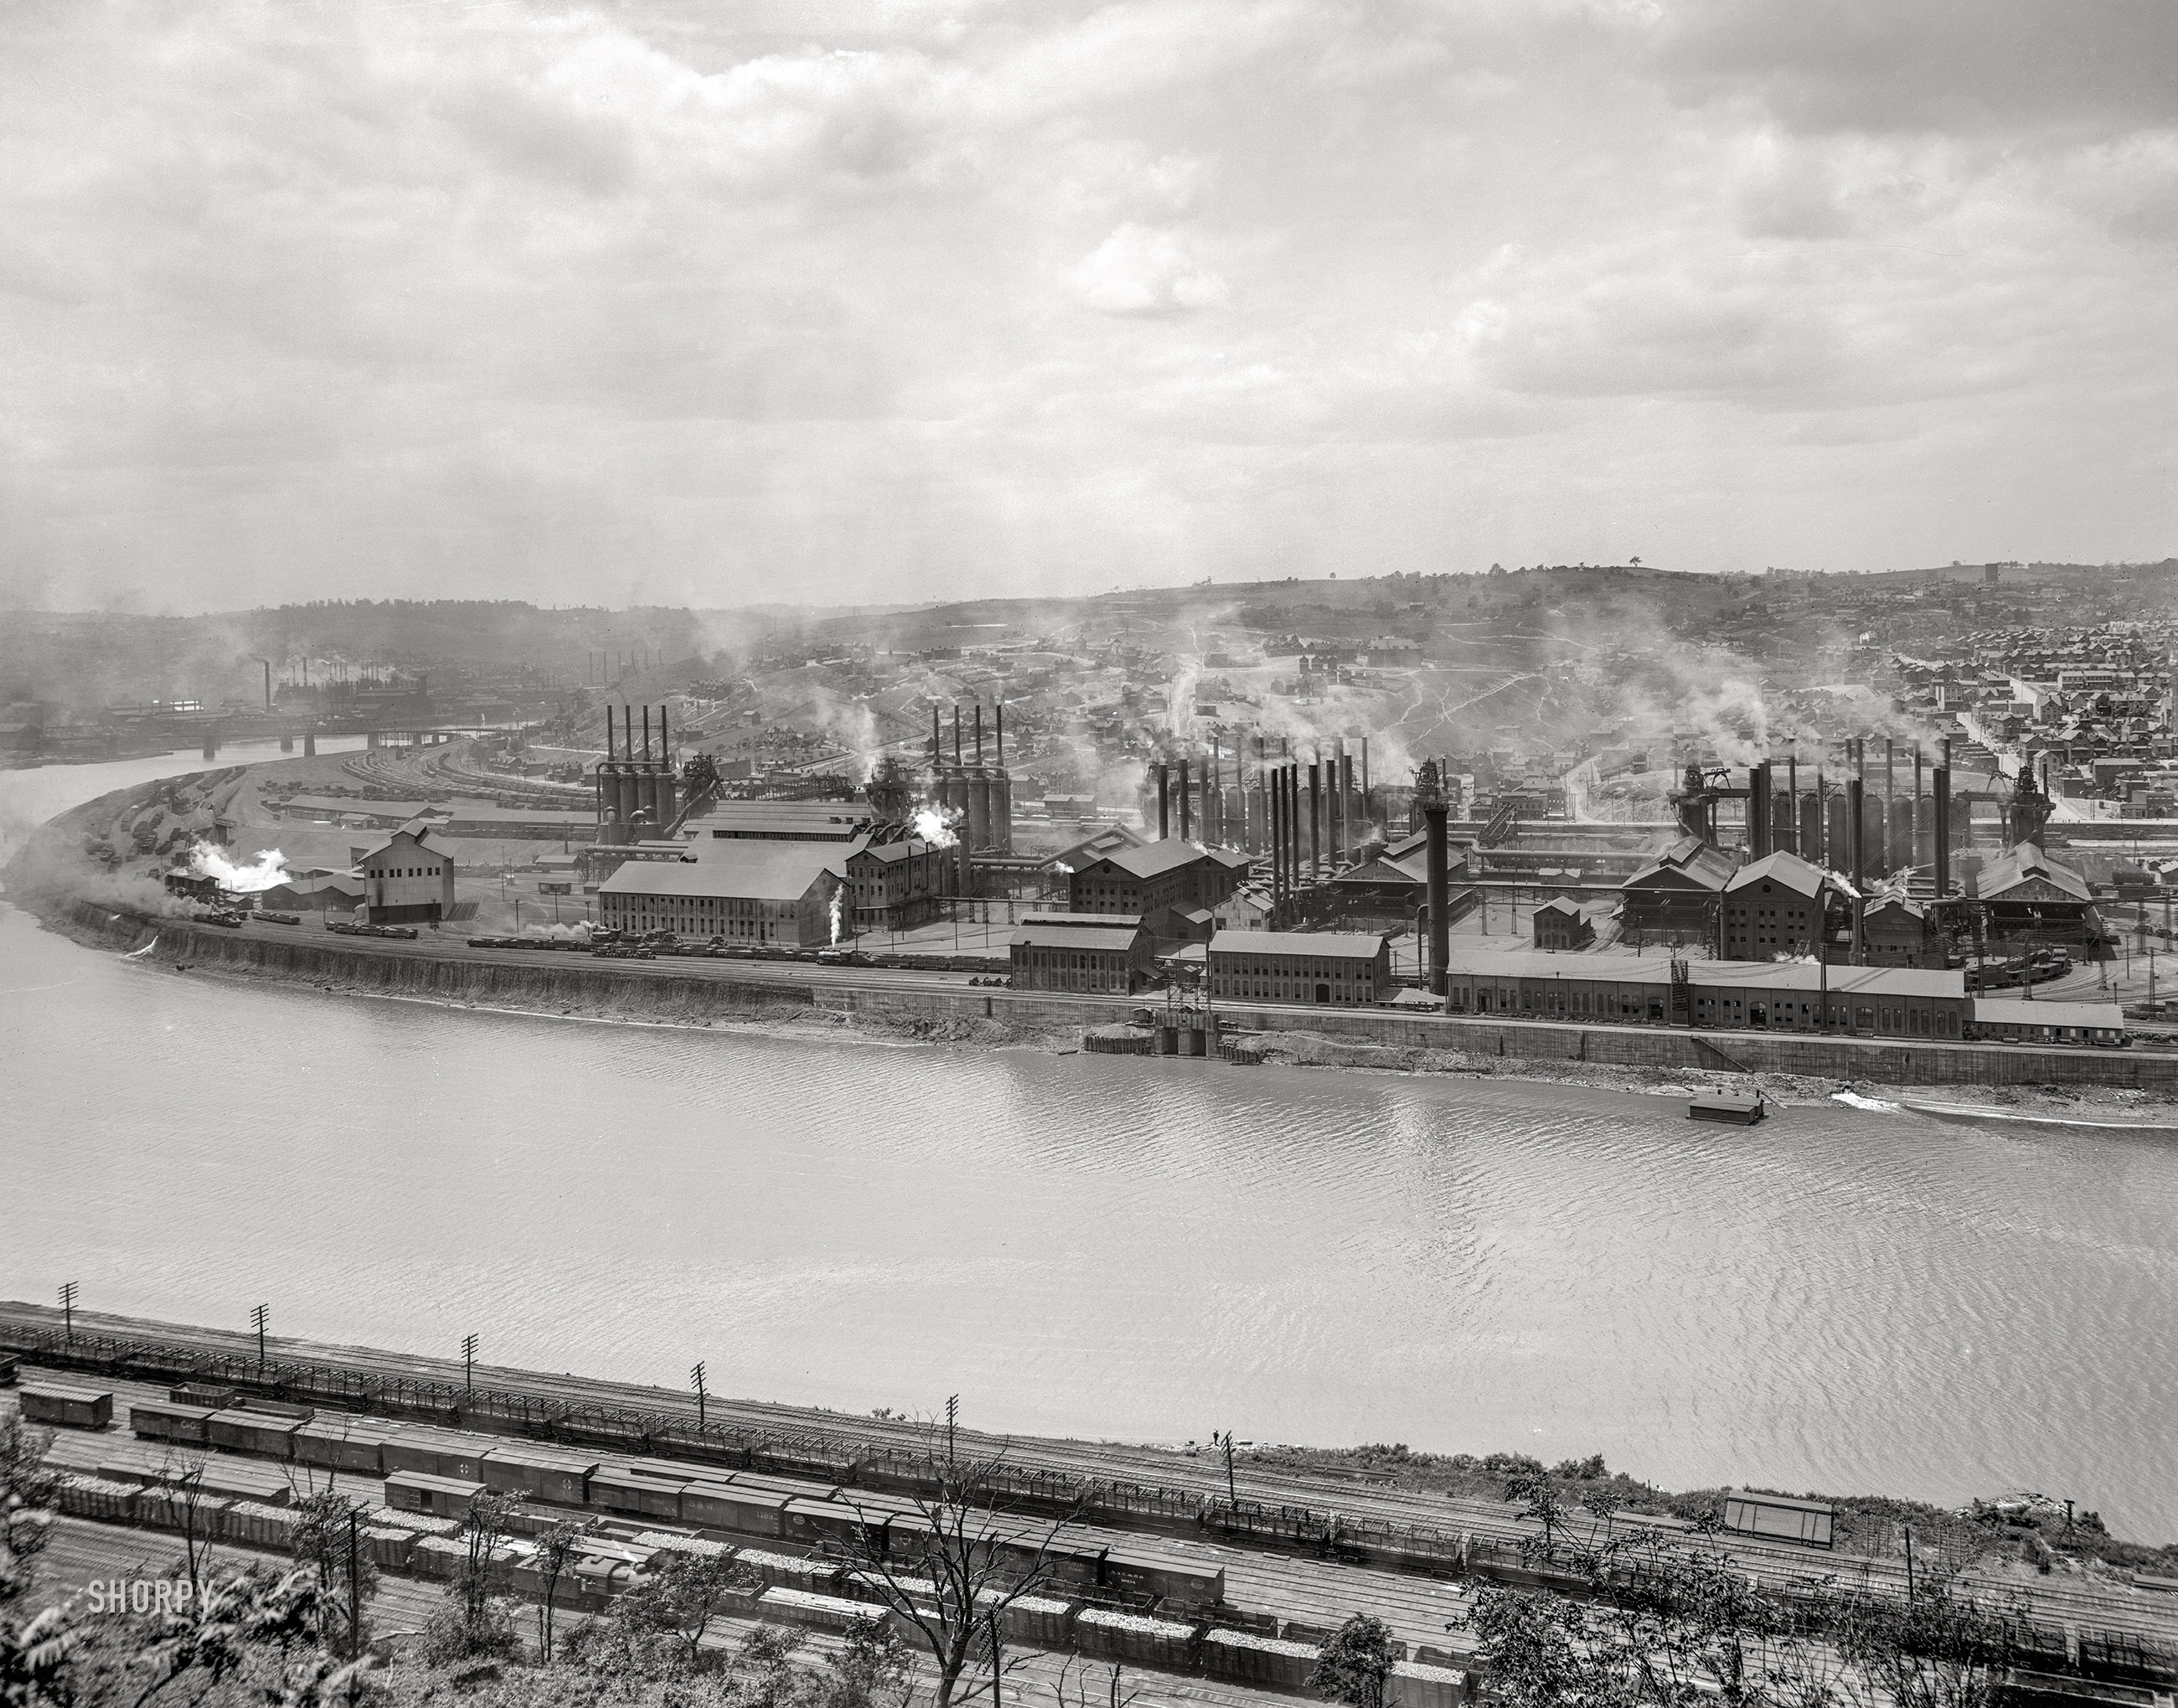 The Monongahela River circa 1909. "Duquesne Steel Plant, Carnegie Steel Co., Duquesne, Pennsylvania." 8x10 inch dry plate glass negative, Detroit Publishing Company. View full size.